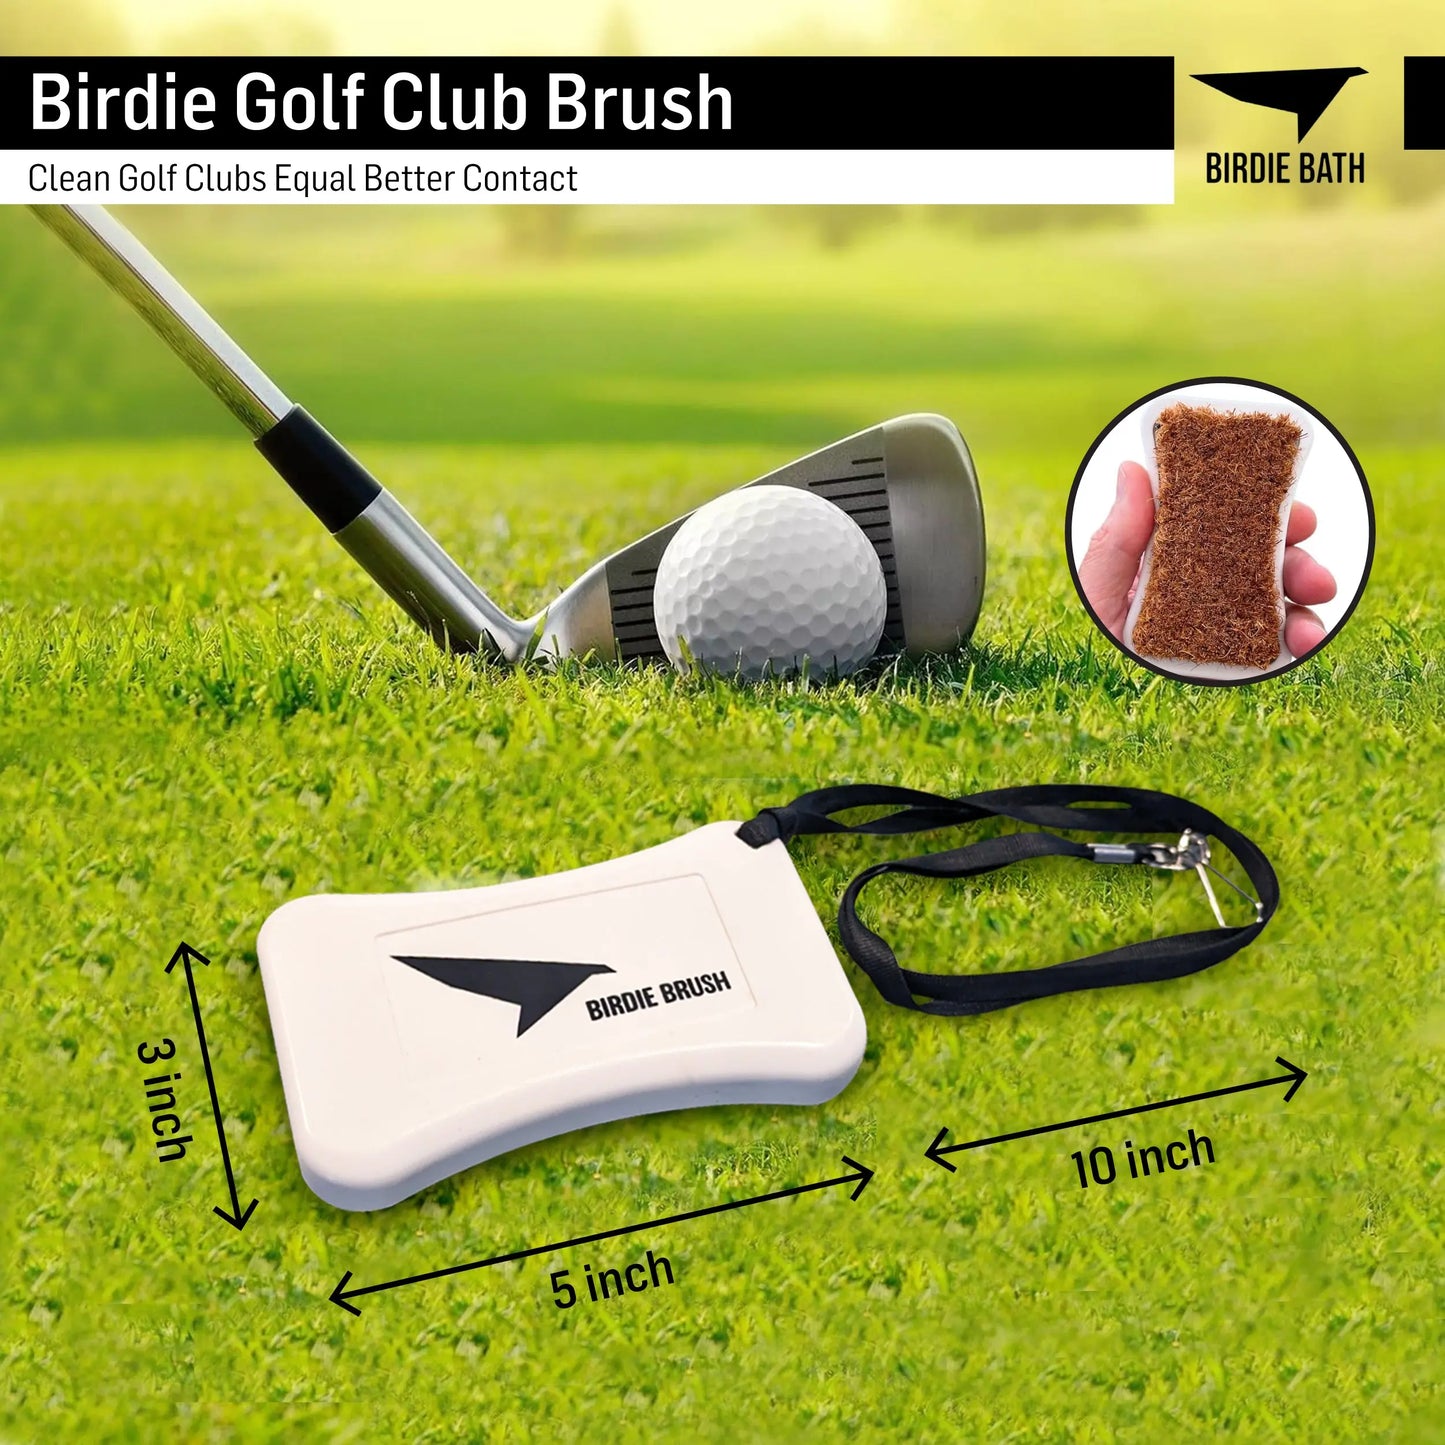 Birdie Brush Golf Technologies LLC